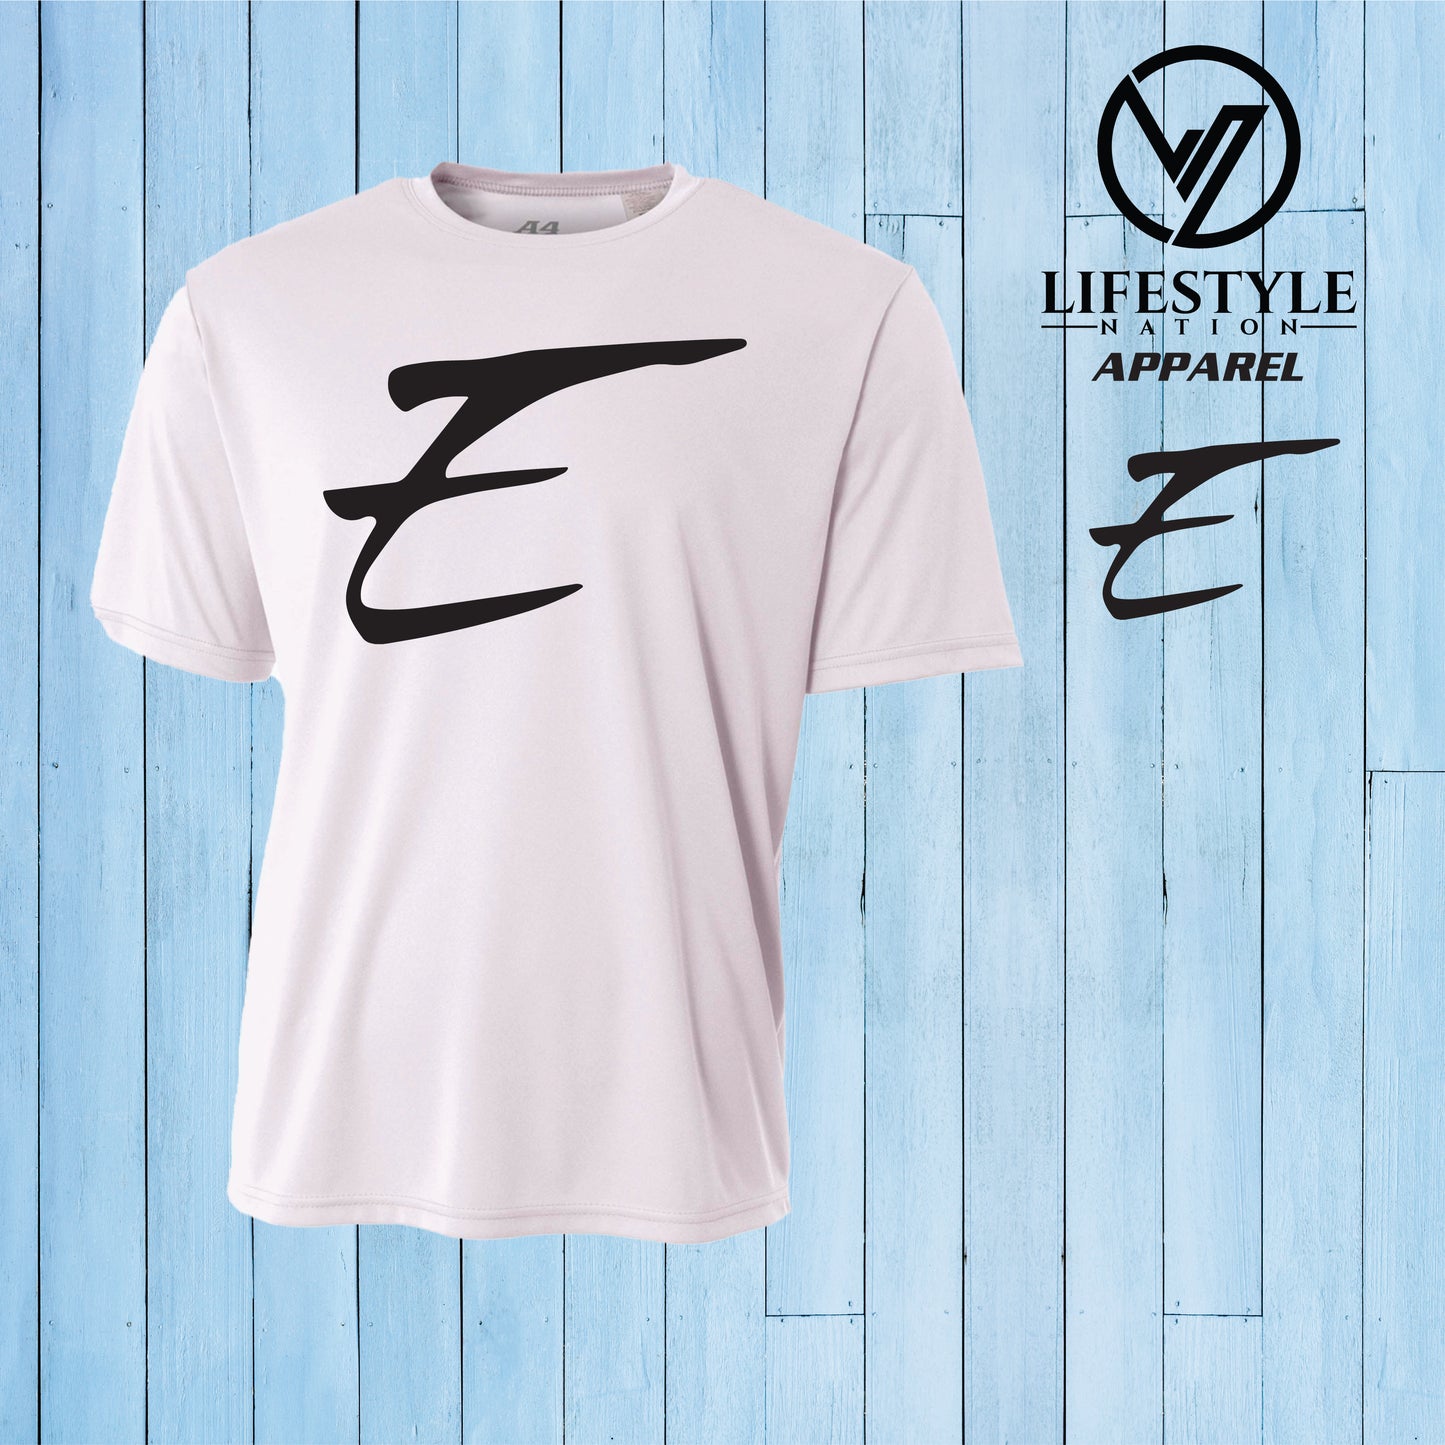 Club Eden Dri Fit T-Shirt White or Black E - Pick Color